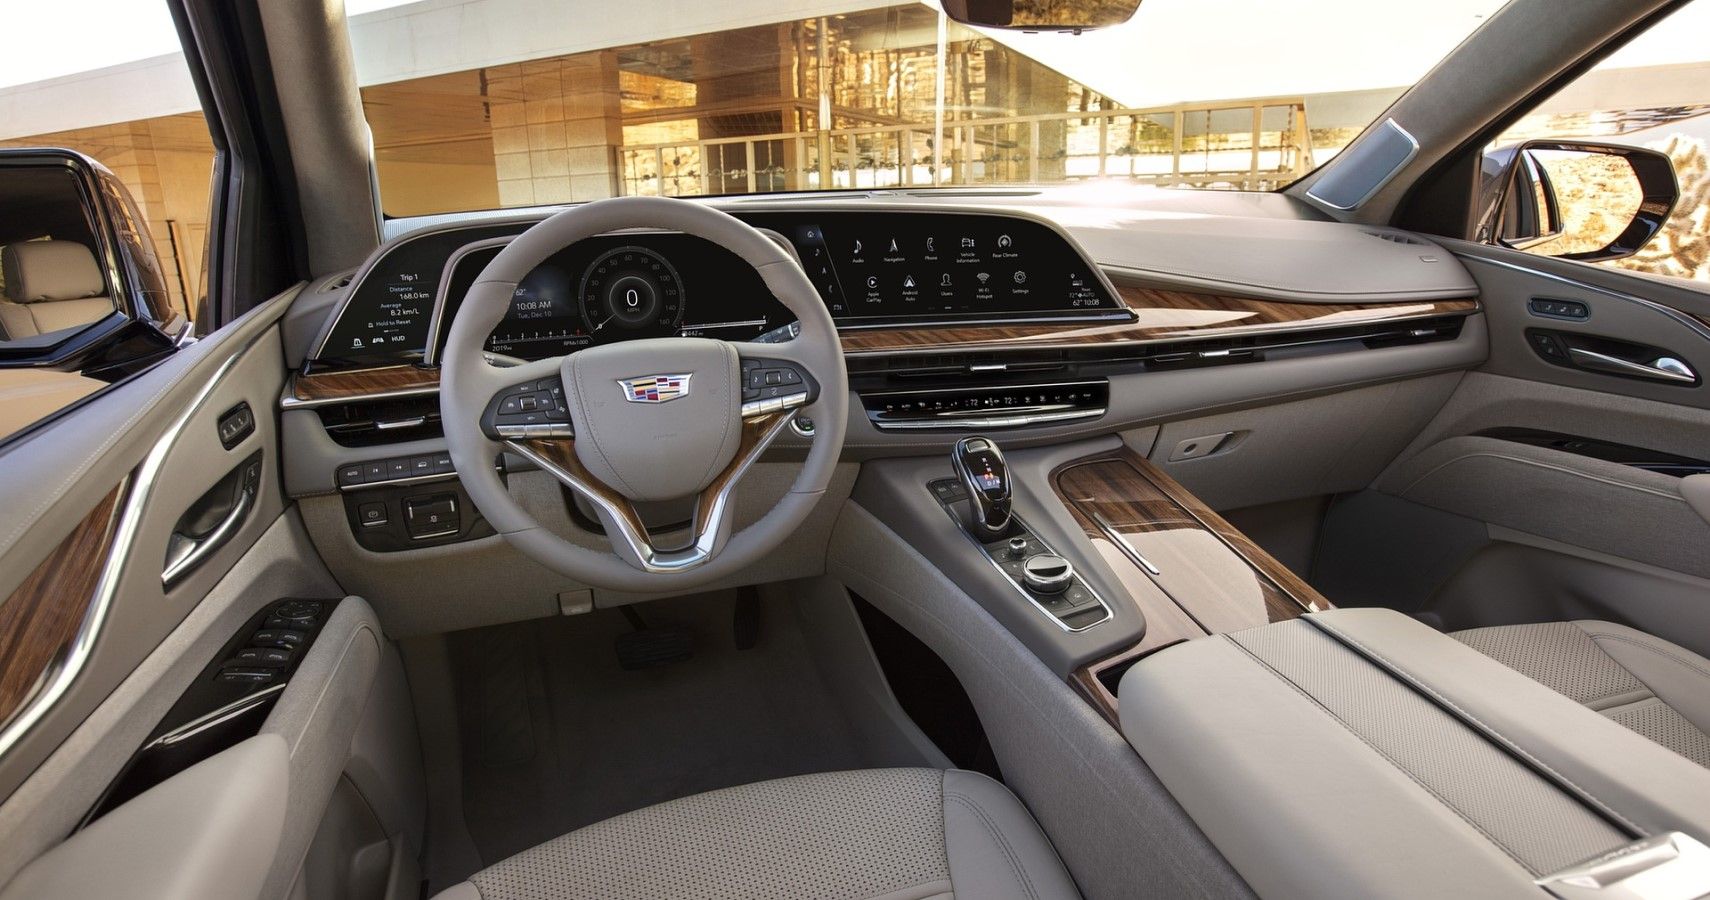 2021 Cadillac Escalade interior dashboard layout view